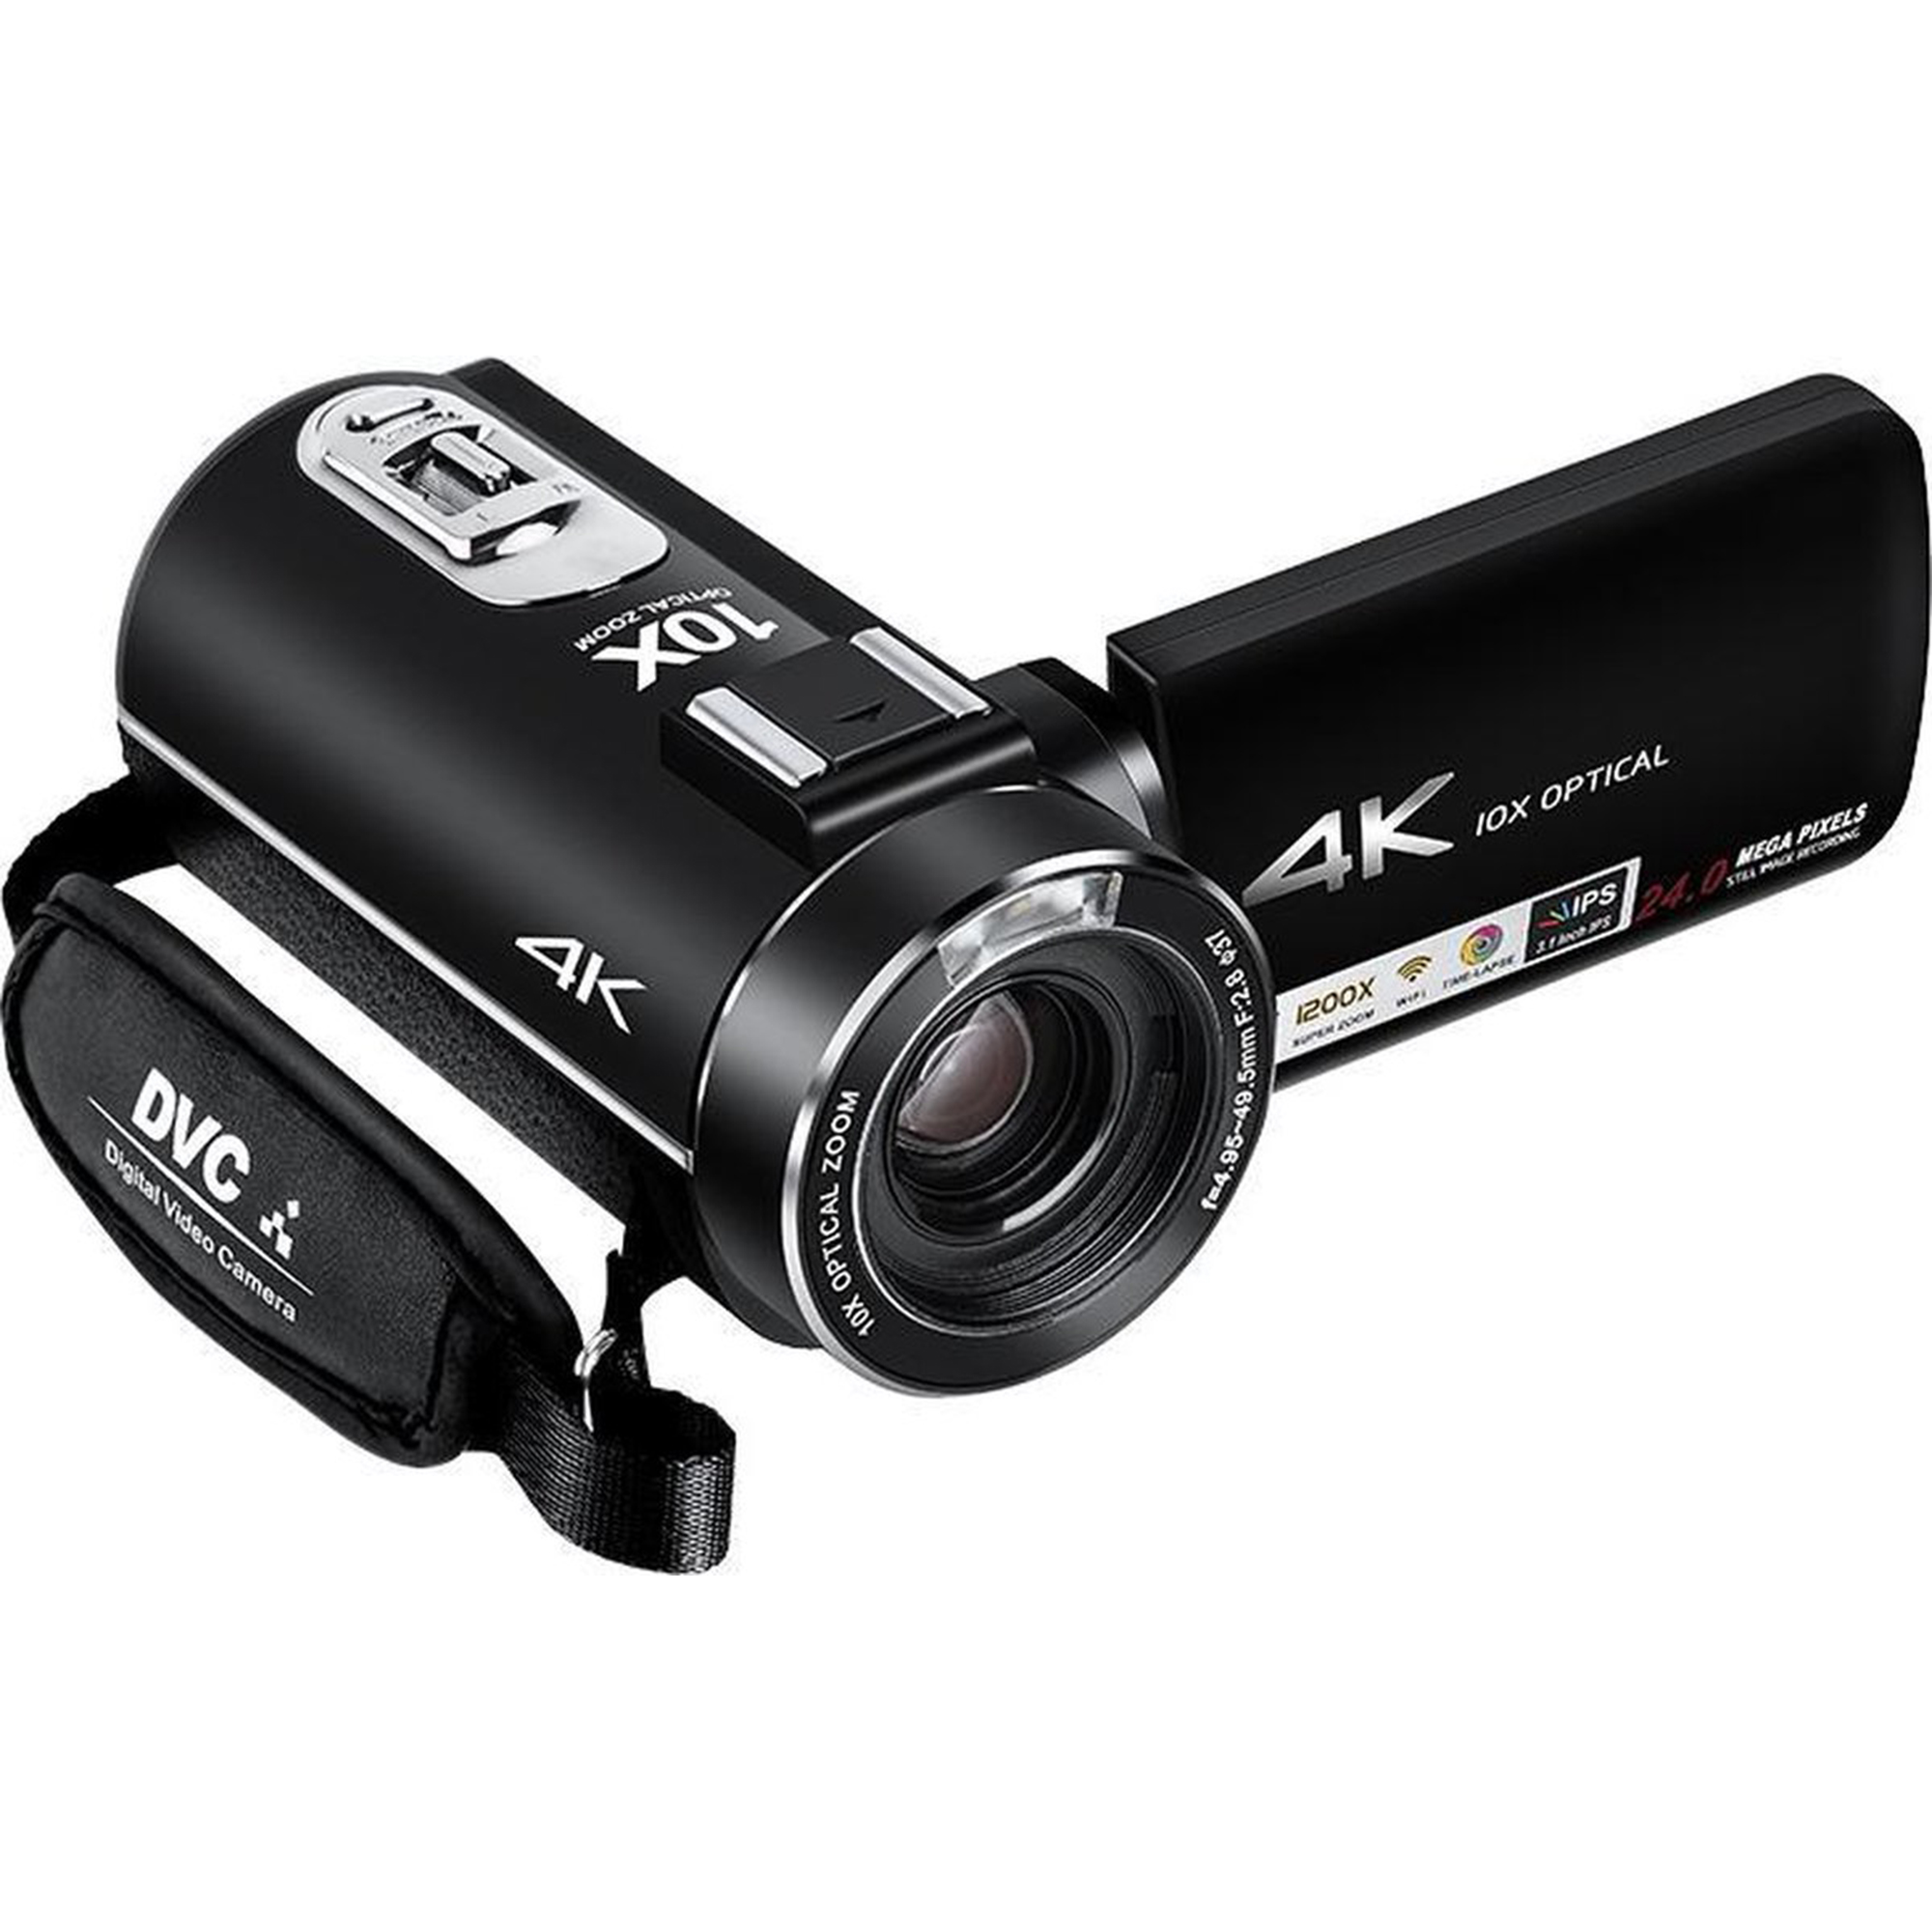 LIPA AD-C7 camcorder 24 10xopt. 4K Megapixel, Camcorder Zoom